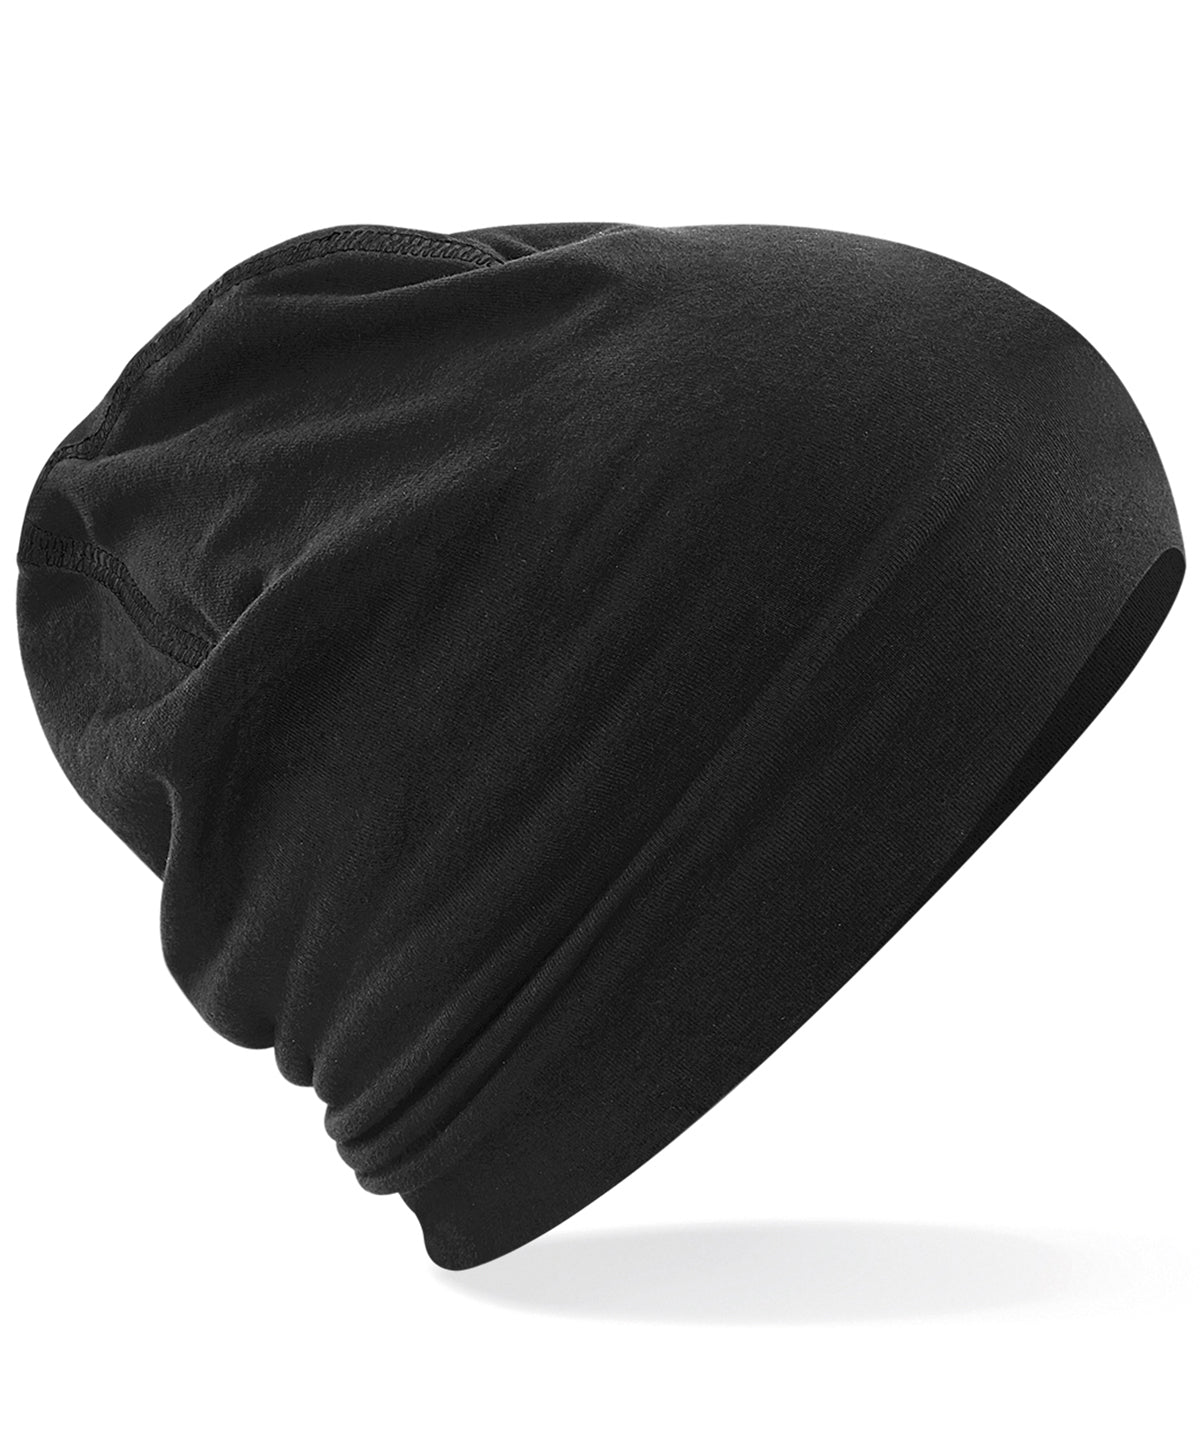 Personalised Hats - Black Beechfield Hemsedal cotton beanie